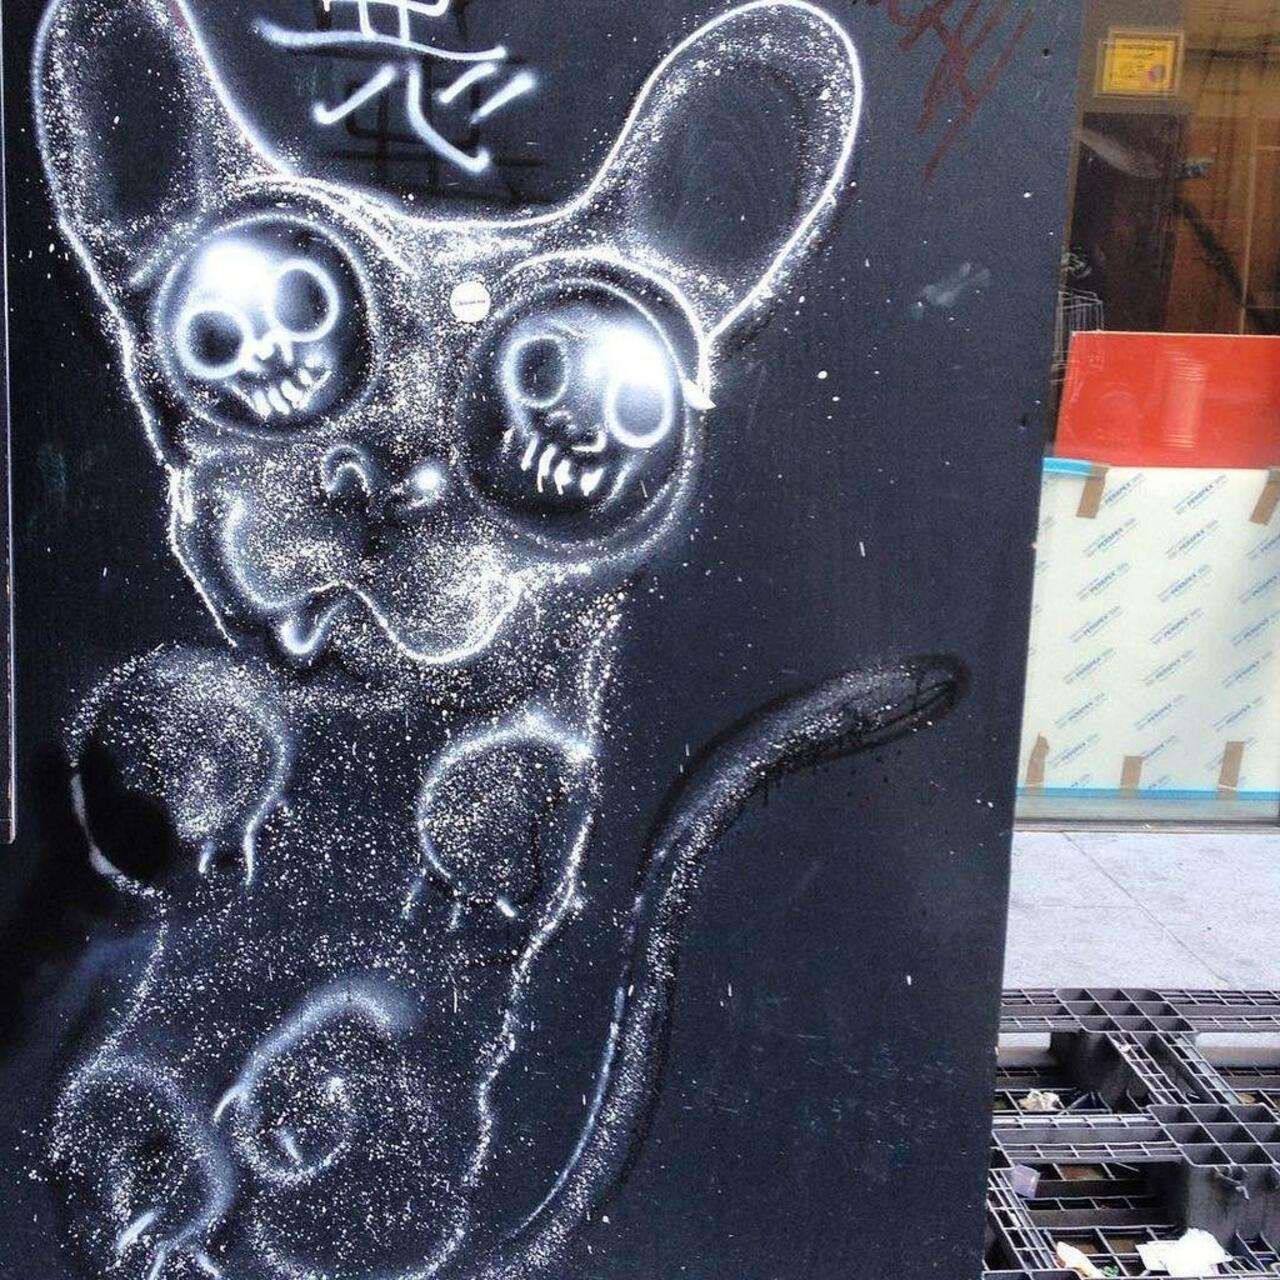 Whooooo #streetart #streetartlondon #graffiti #london #thisislondon by isadarko http://t.co/u5LNyCqUf1